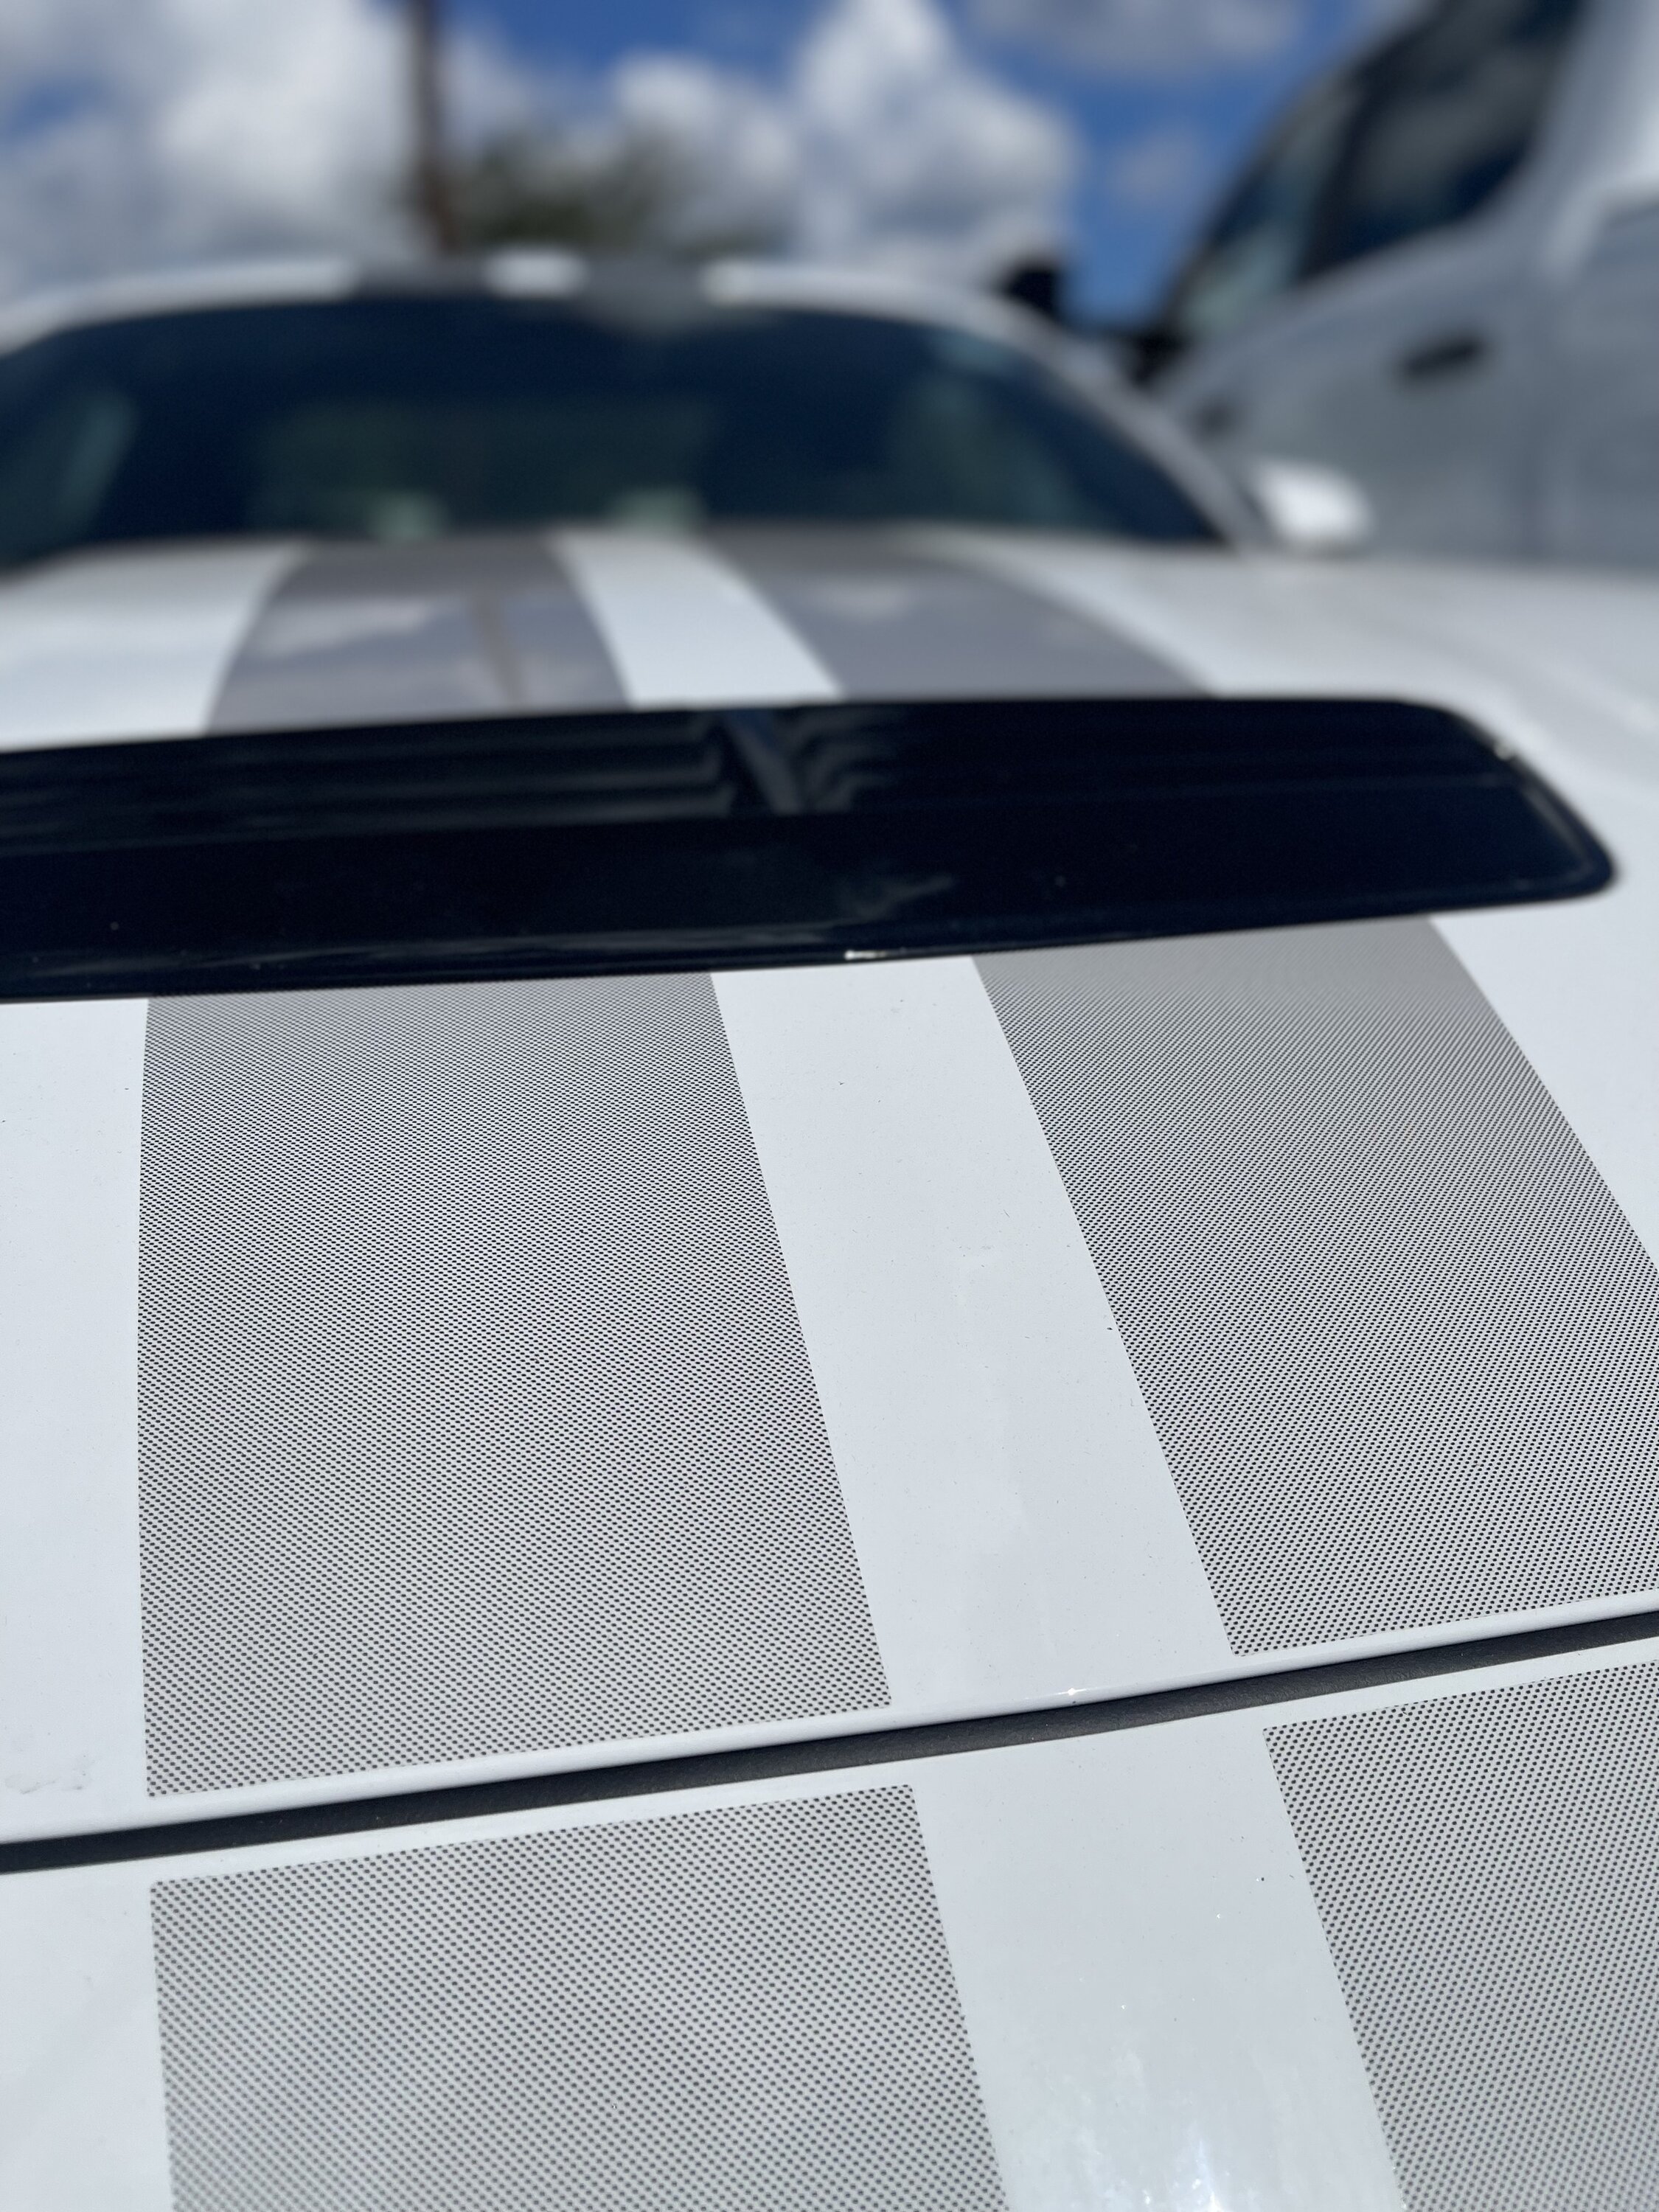 S650 Mustang Opaque factory stripes closeup photos IMG_1775